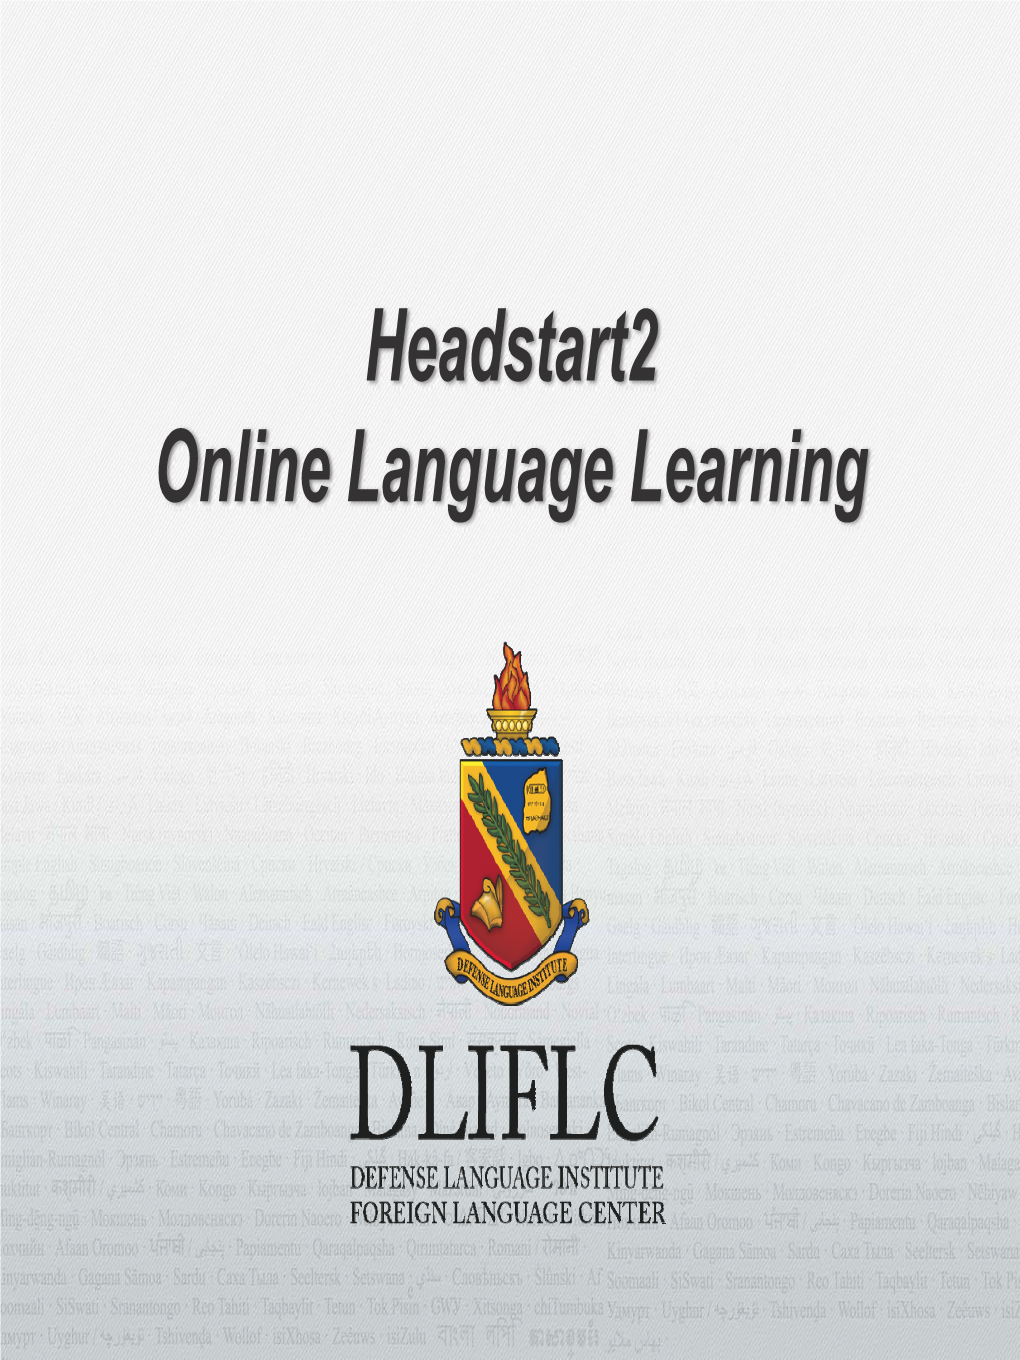 Headstart2 Online Language Learning DEFENSE LANGUAGE INSTITUTE FOREIGN LANGUAGE CENTER